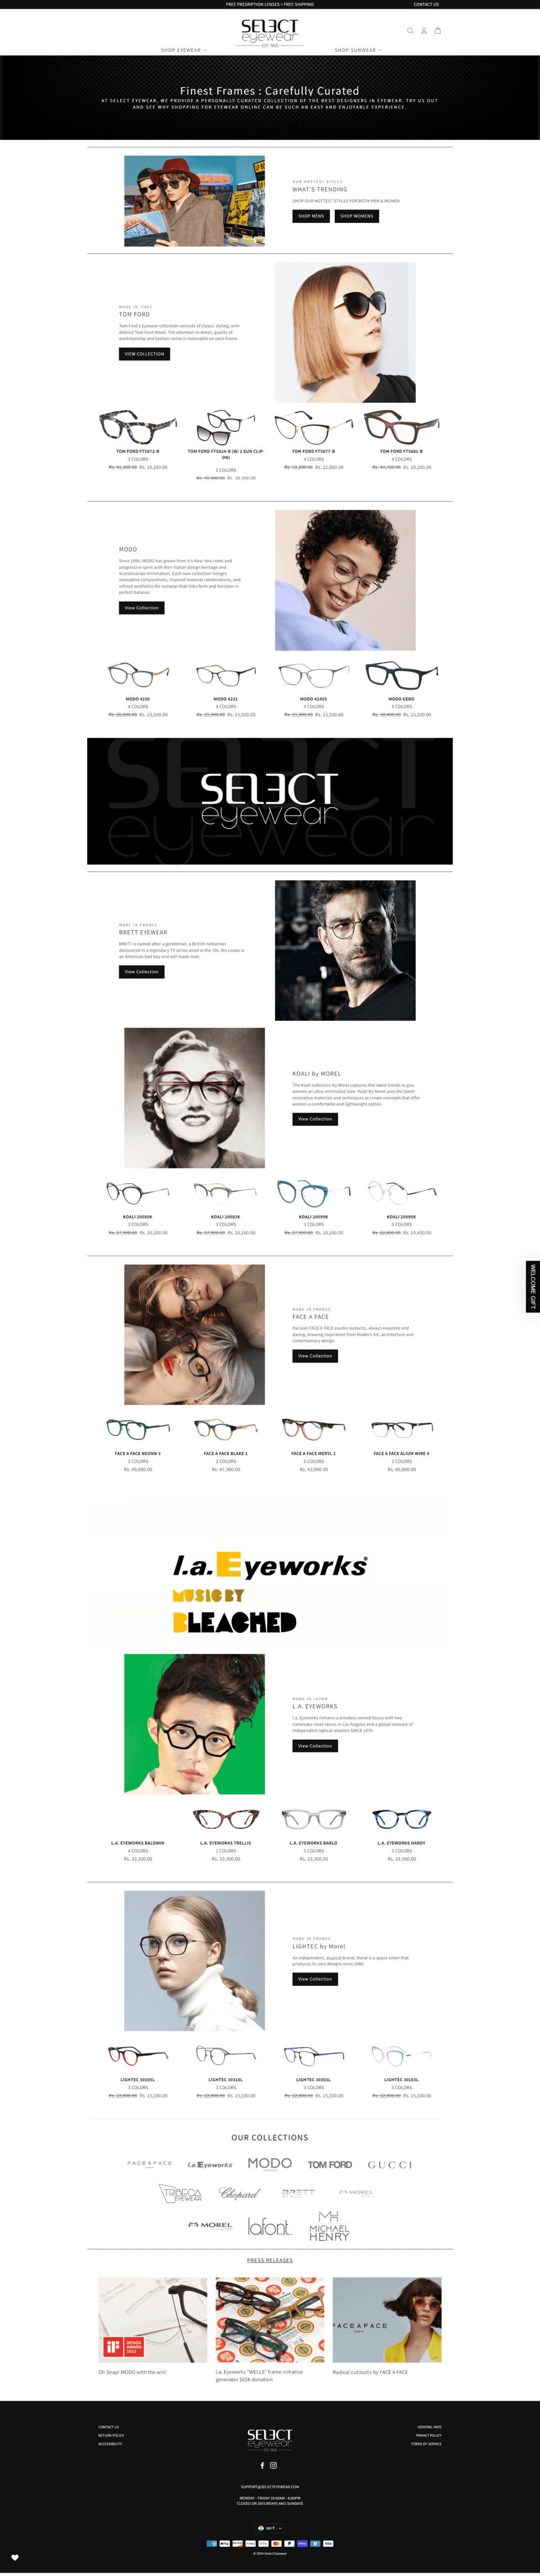 Select eyewear